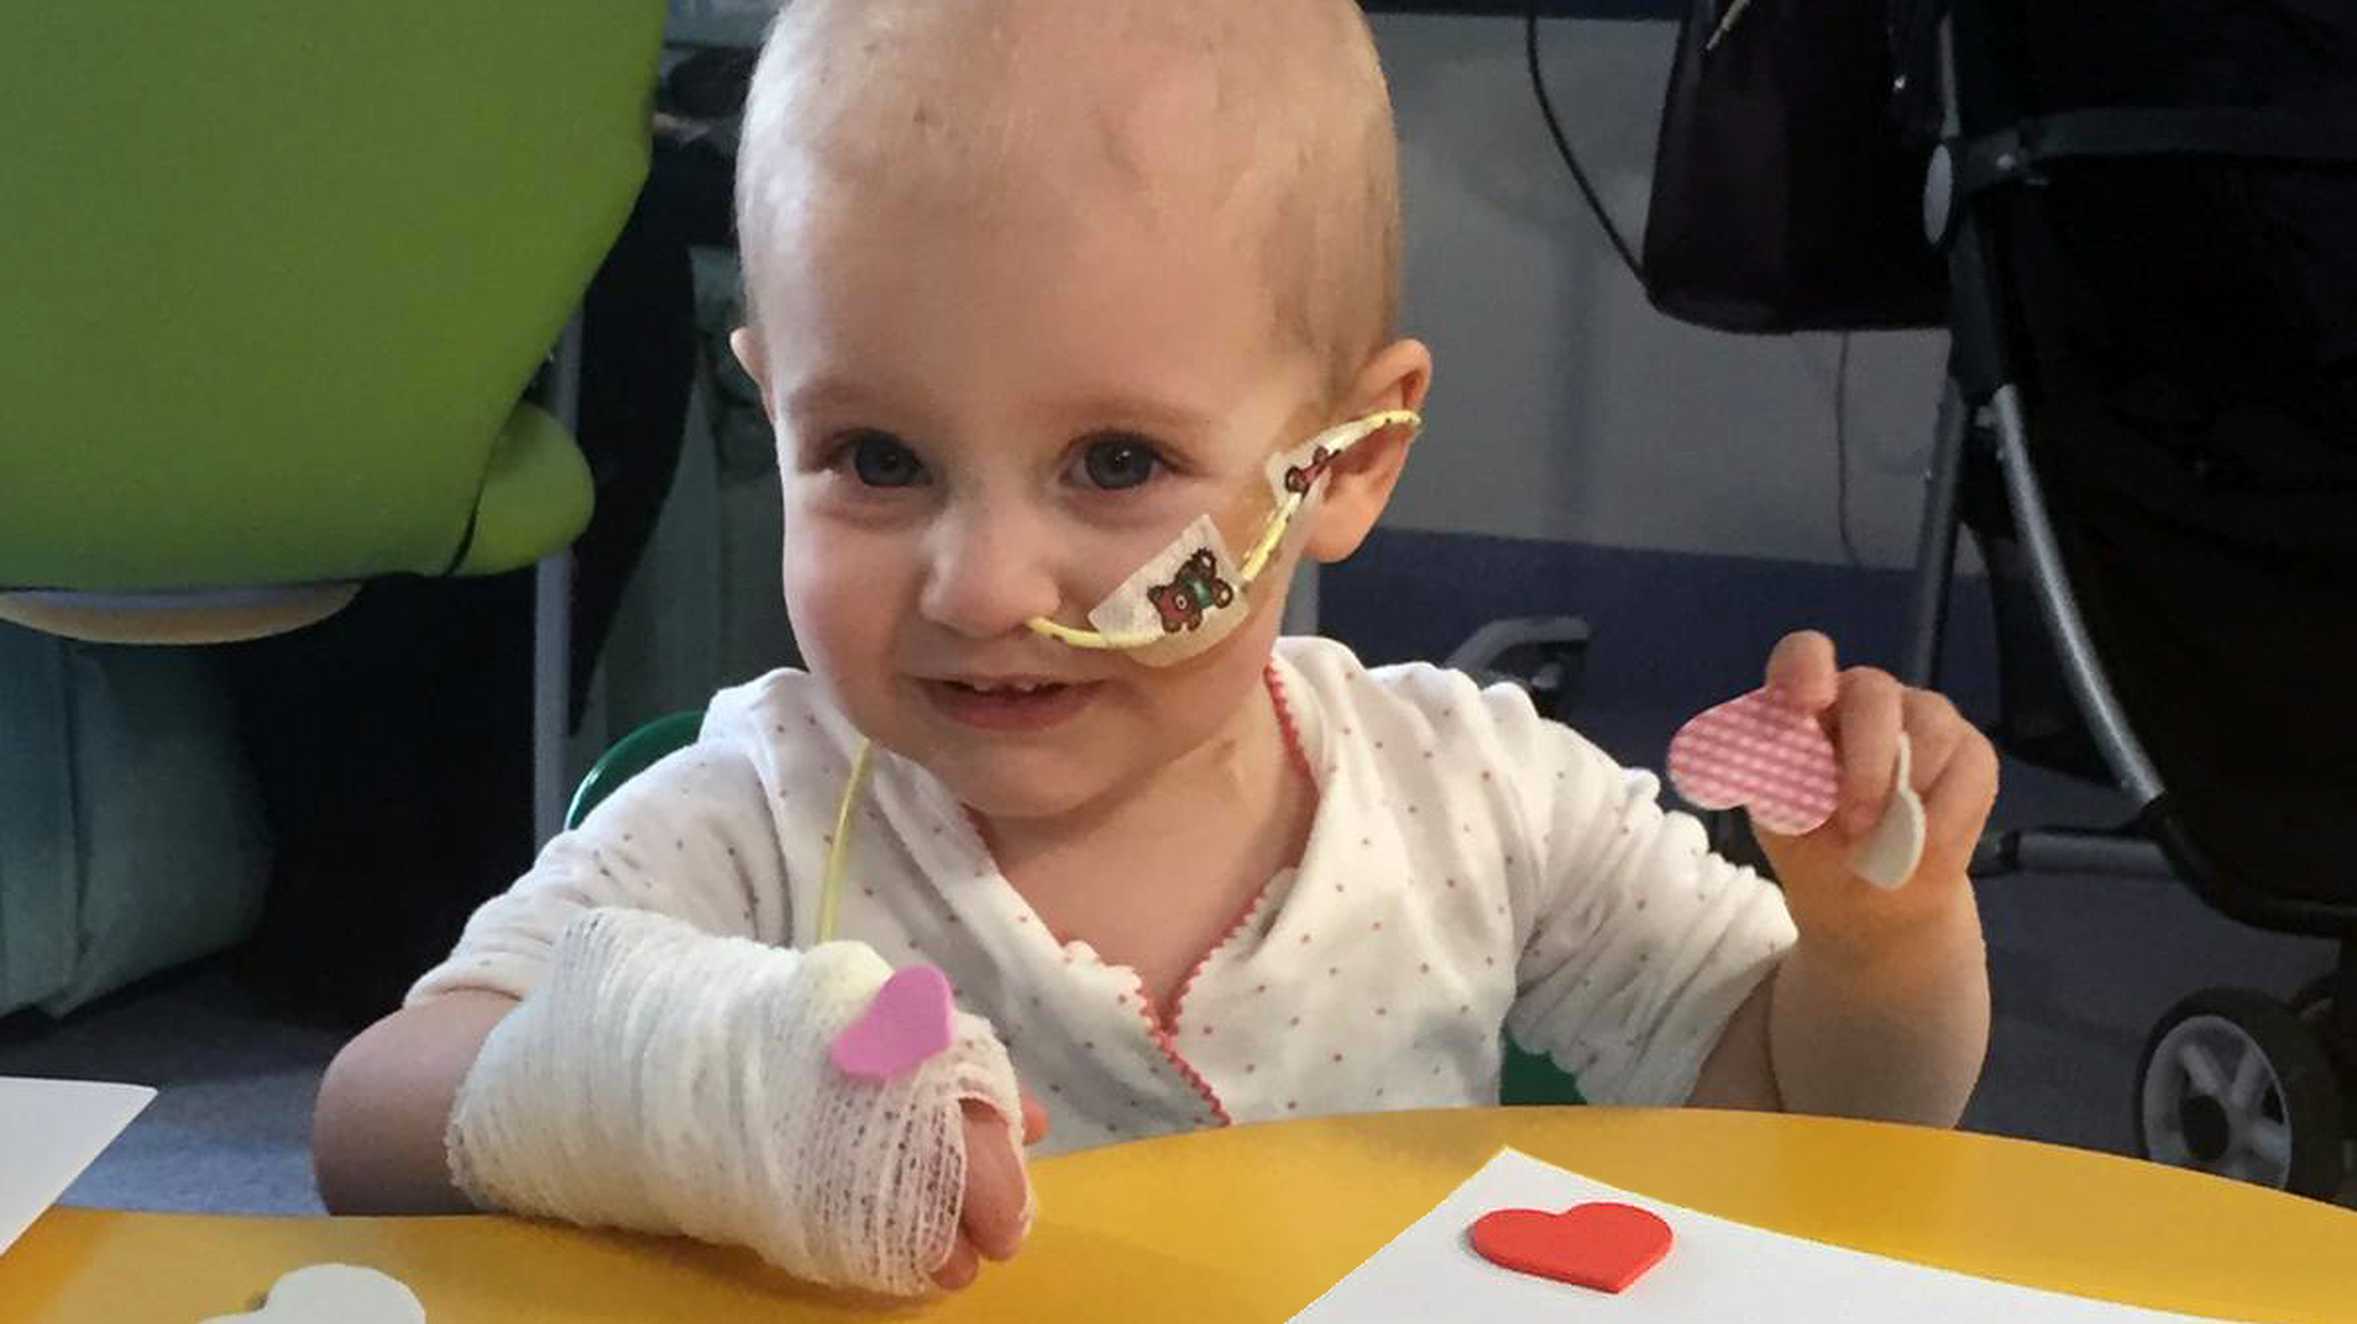 Elsie sat in hospital during her treatment